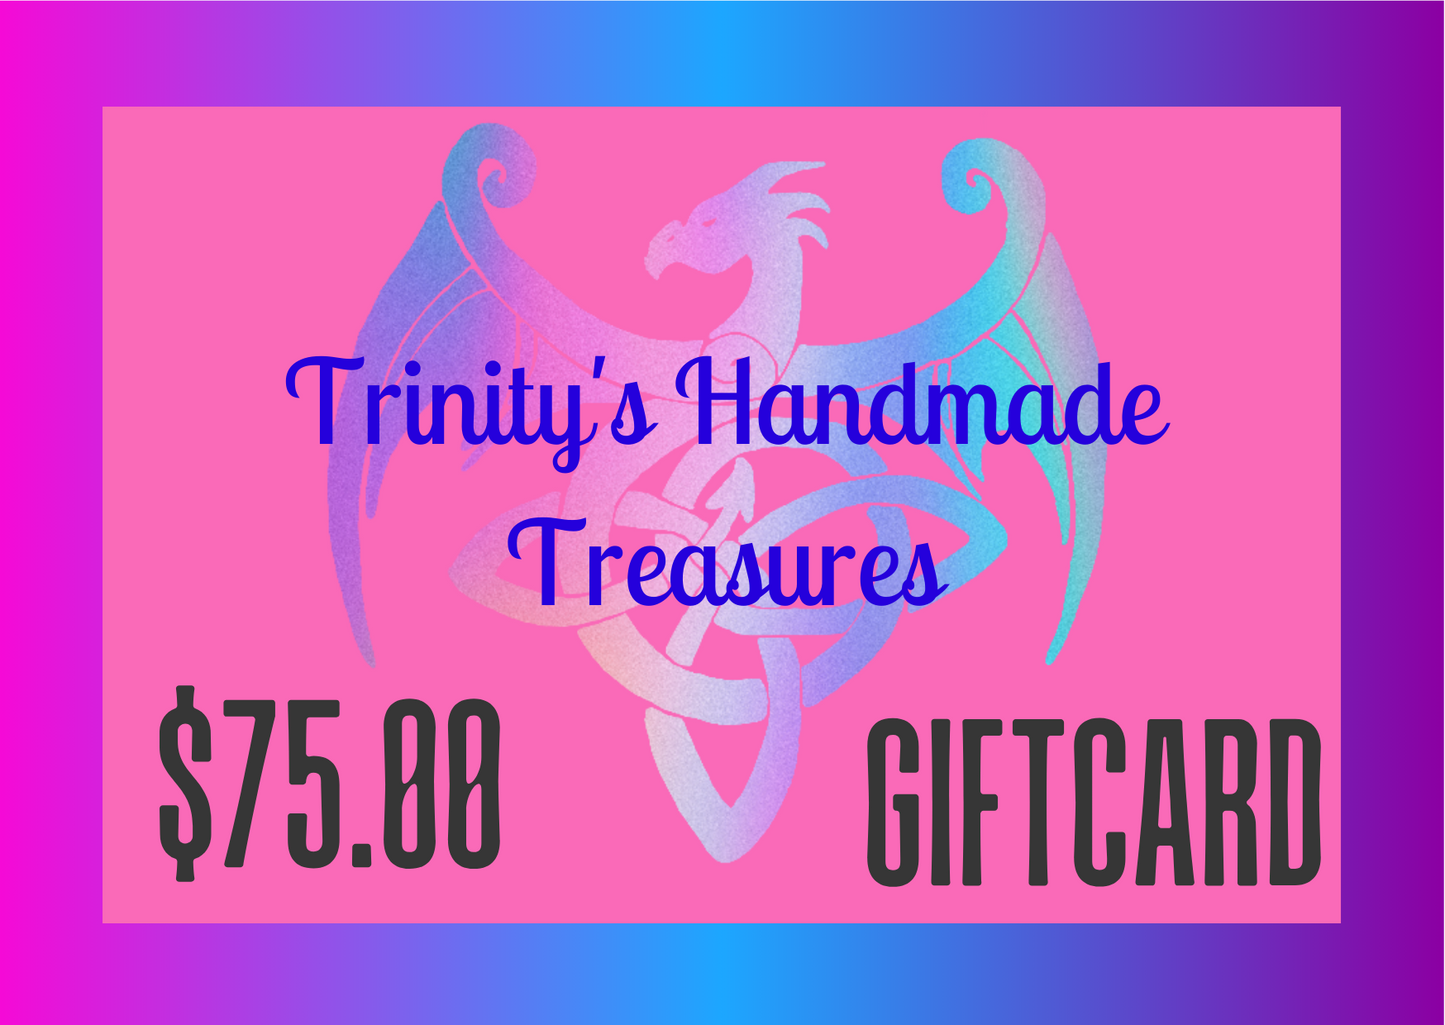 Trinity's Handmade Treasures Gift Card